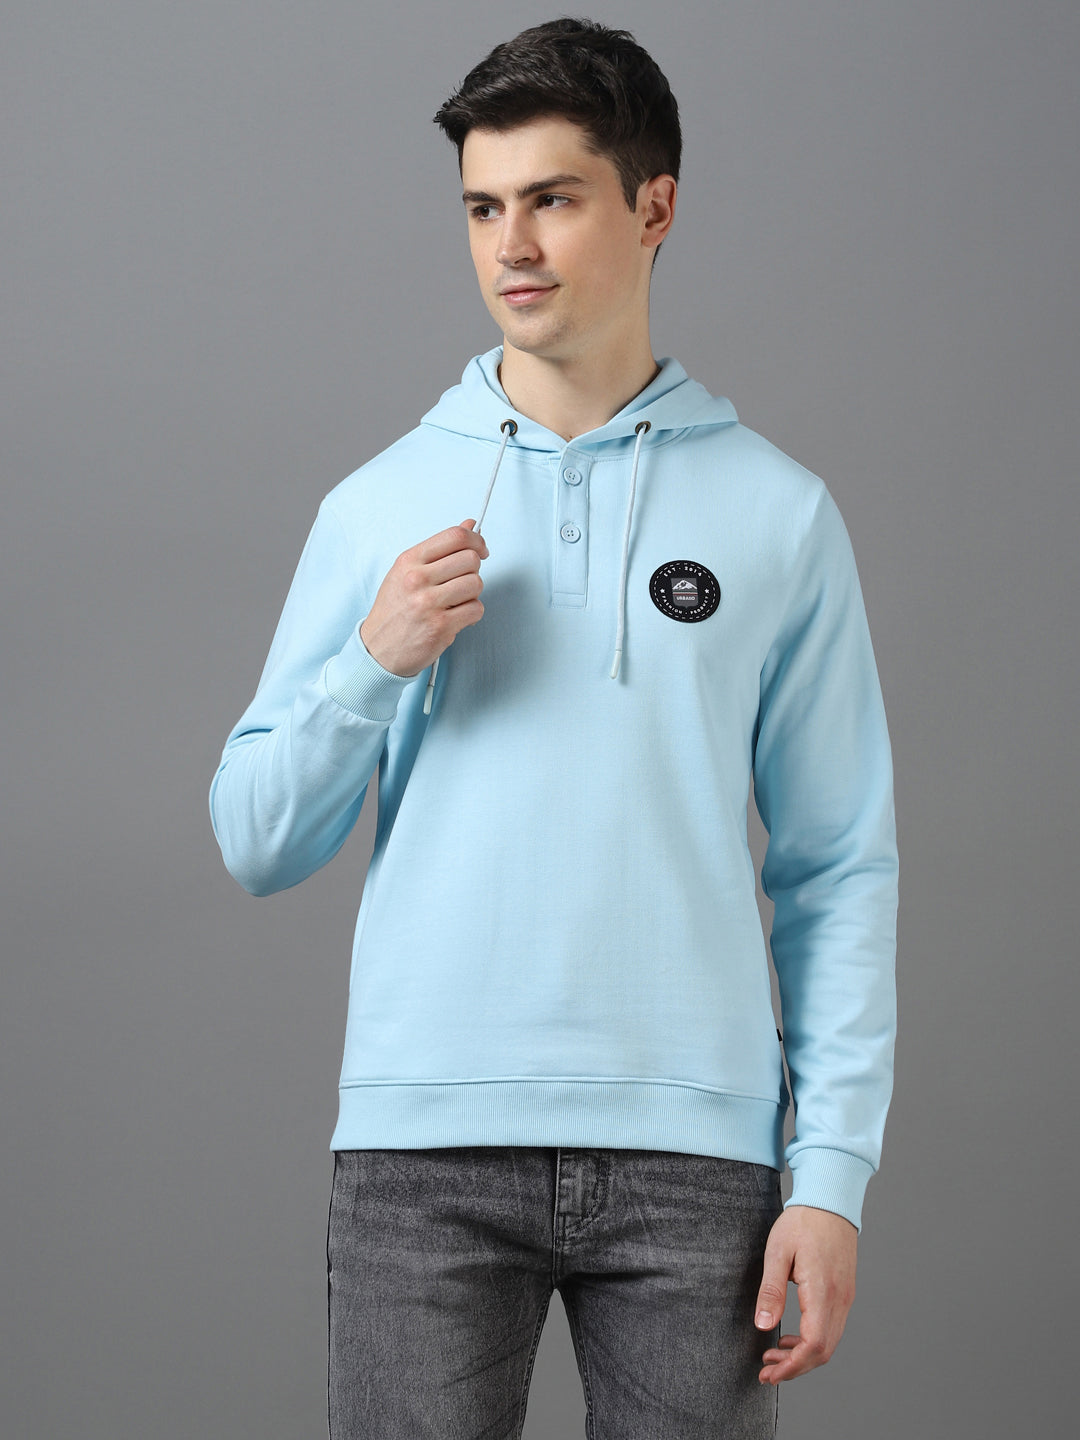 Men's Light Blue Cotton Solid Button Hooded Neck Sweatshirt